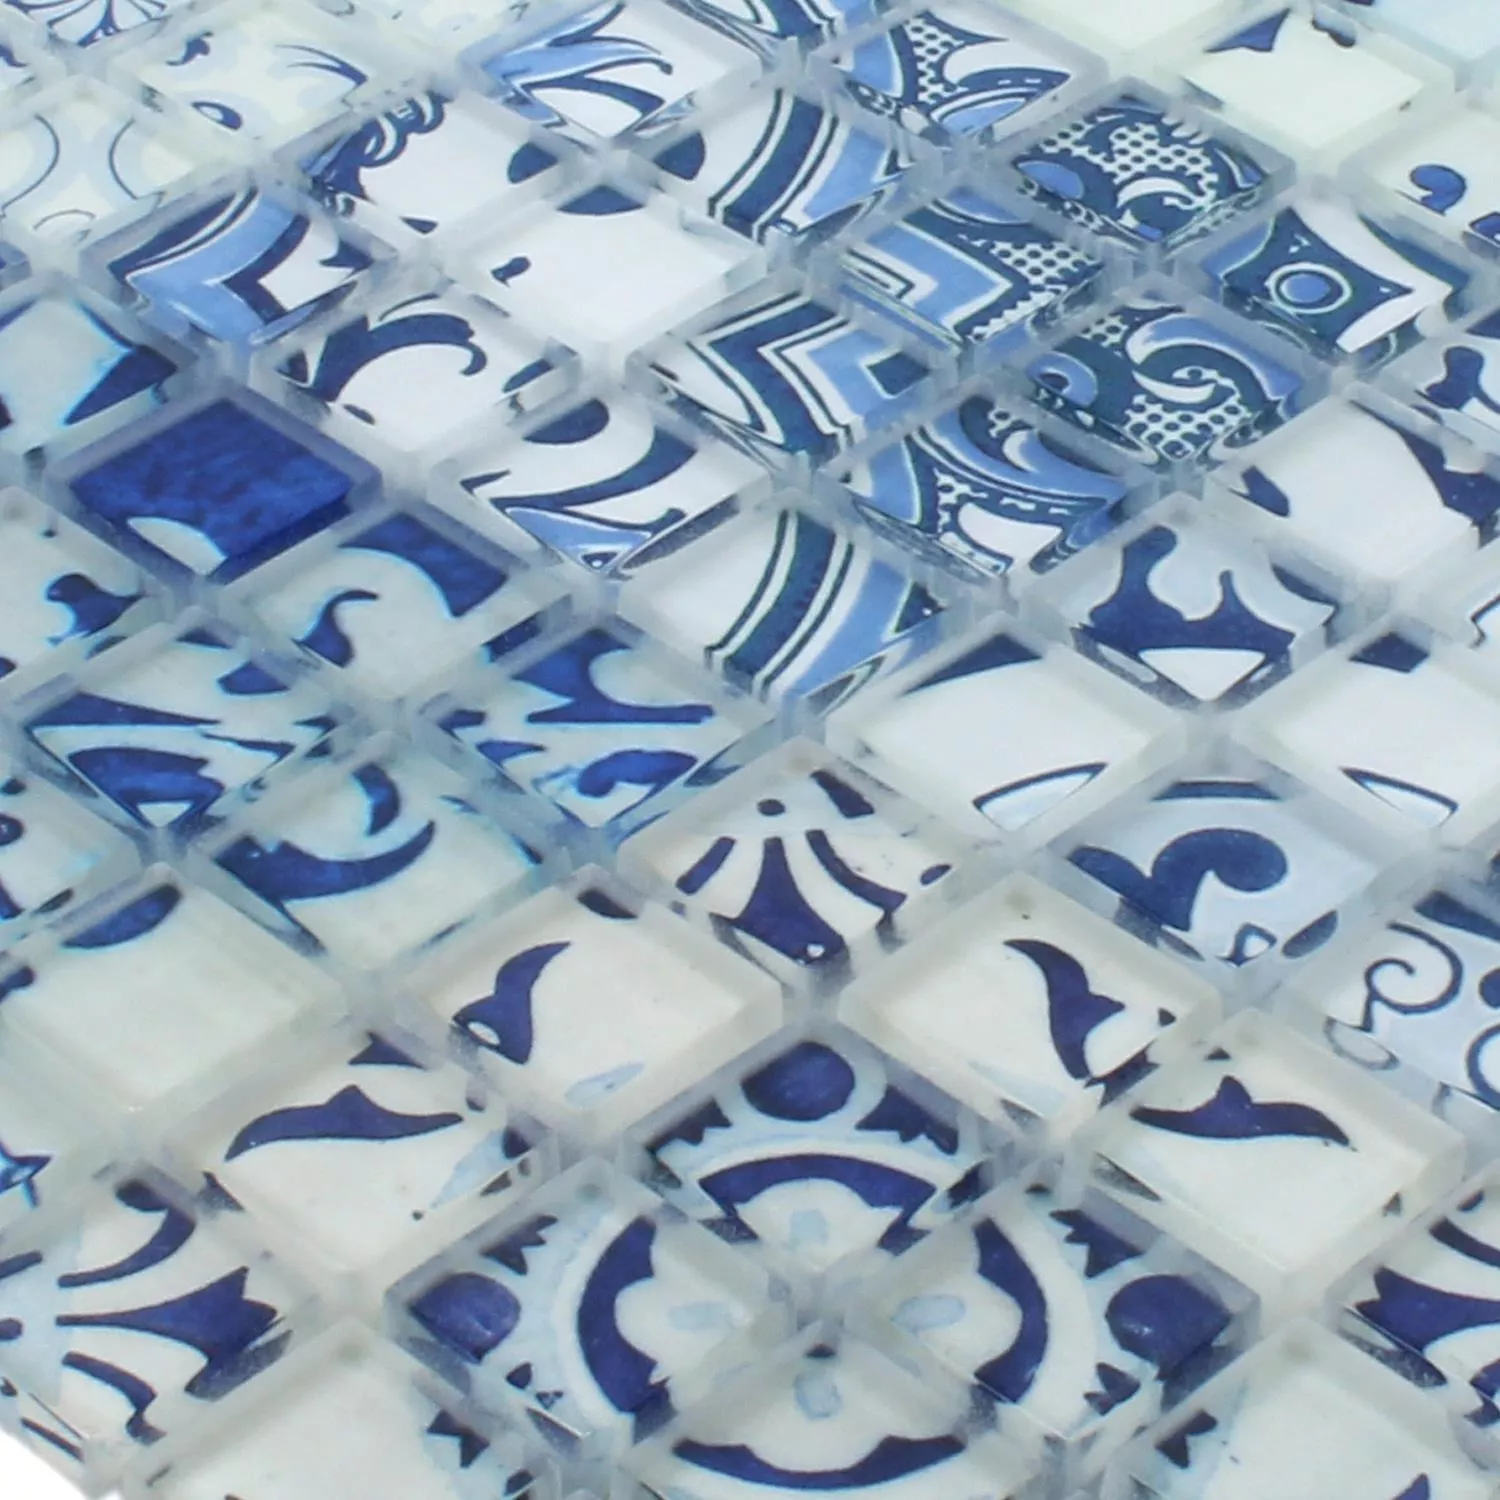 Sample Mosaic Tiles Glass Inspiration Blue